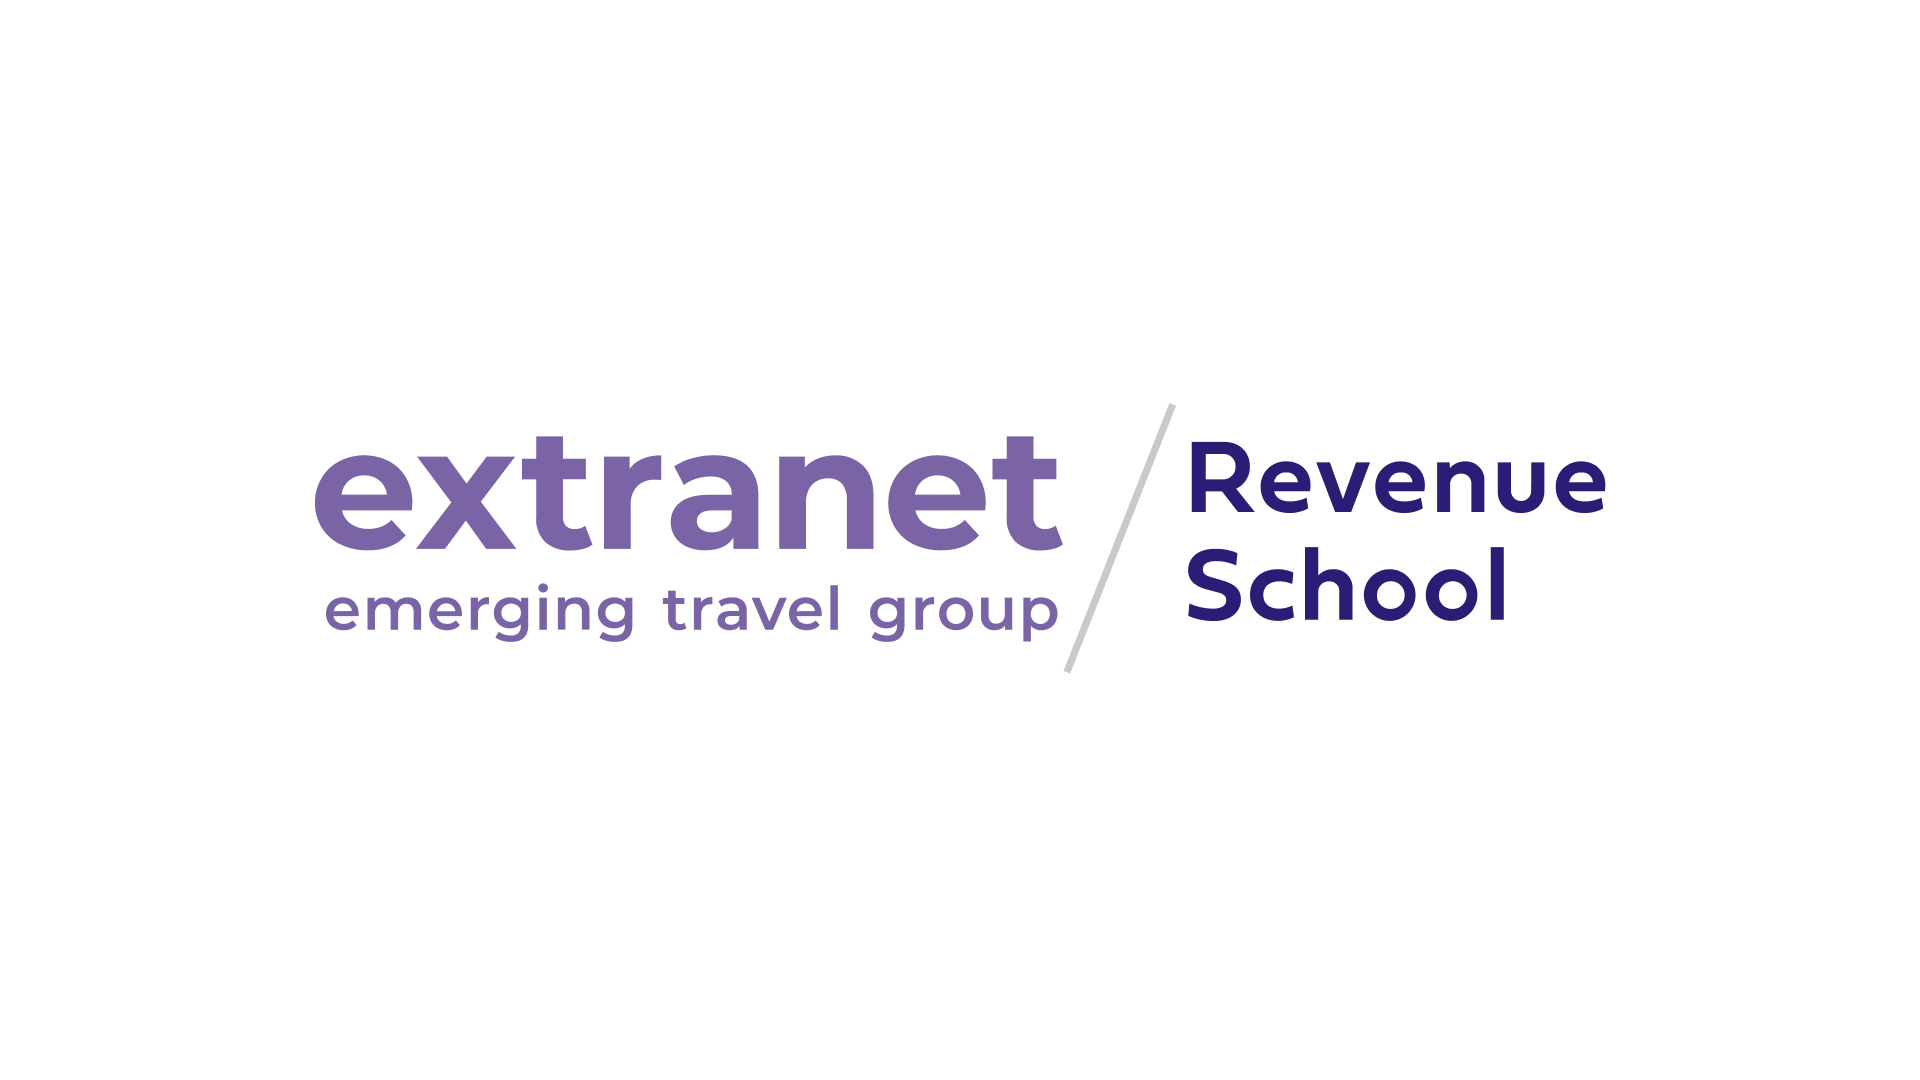 Emerging travel. Emerging Travel Group. Extranet emerging Travel. Emerging Travel Group презентации. Extranet островок.